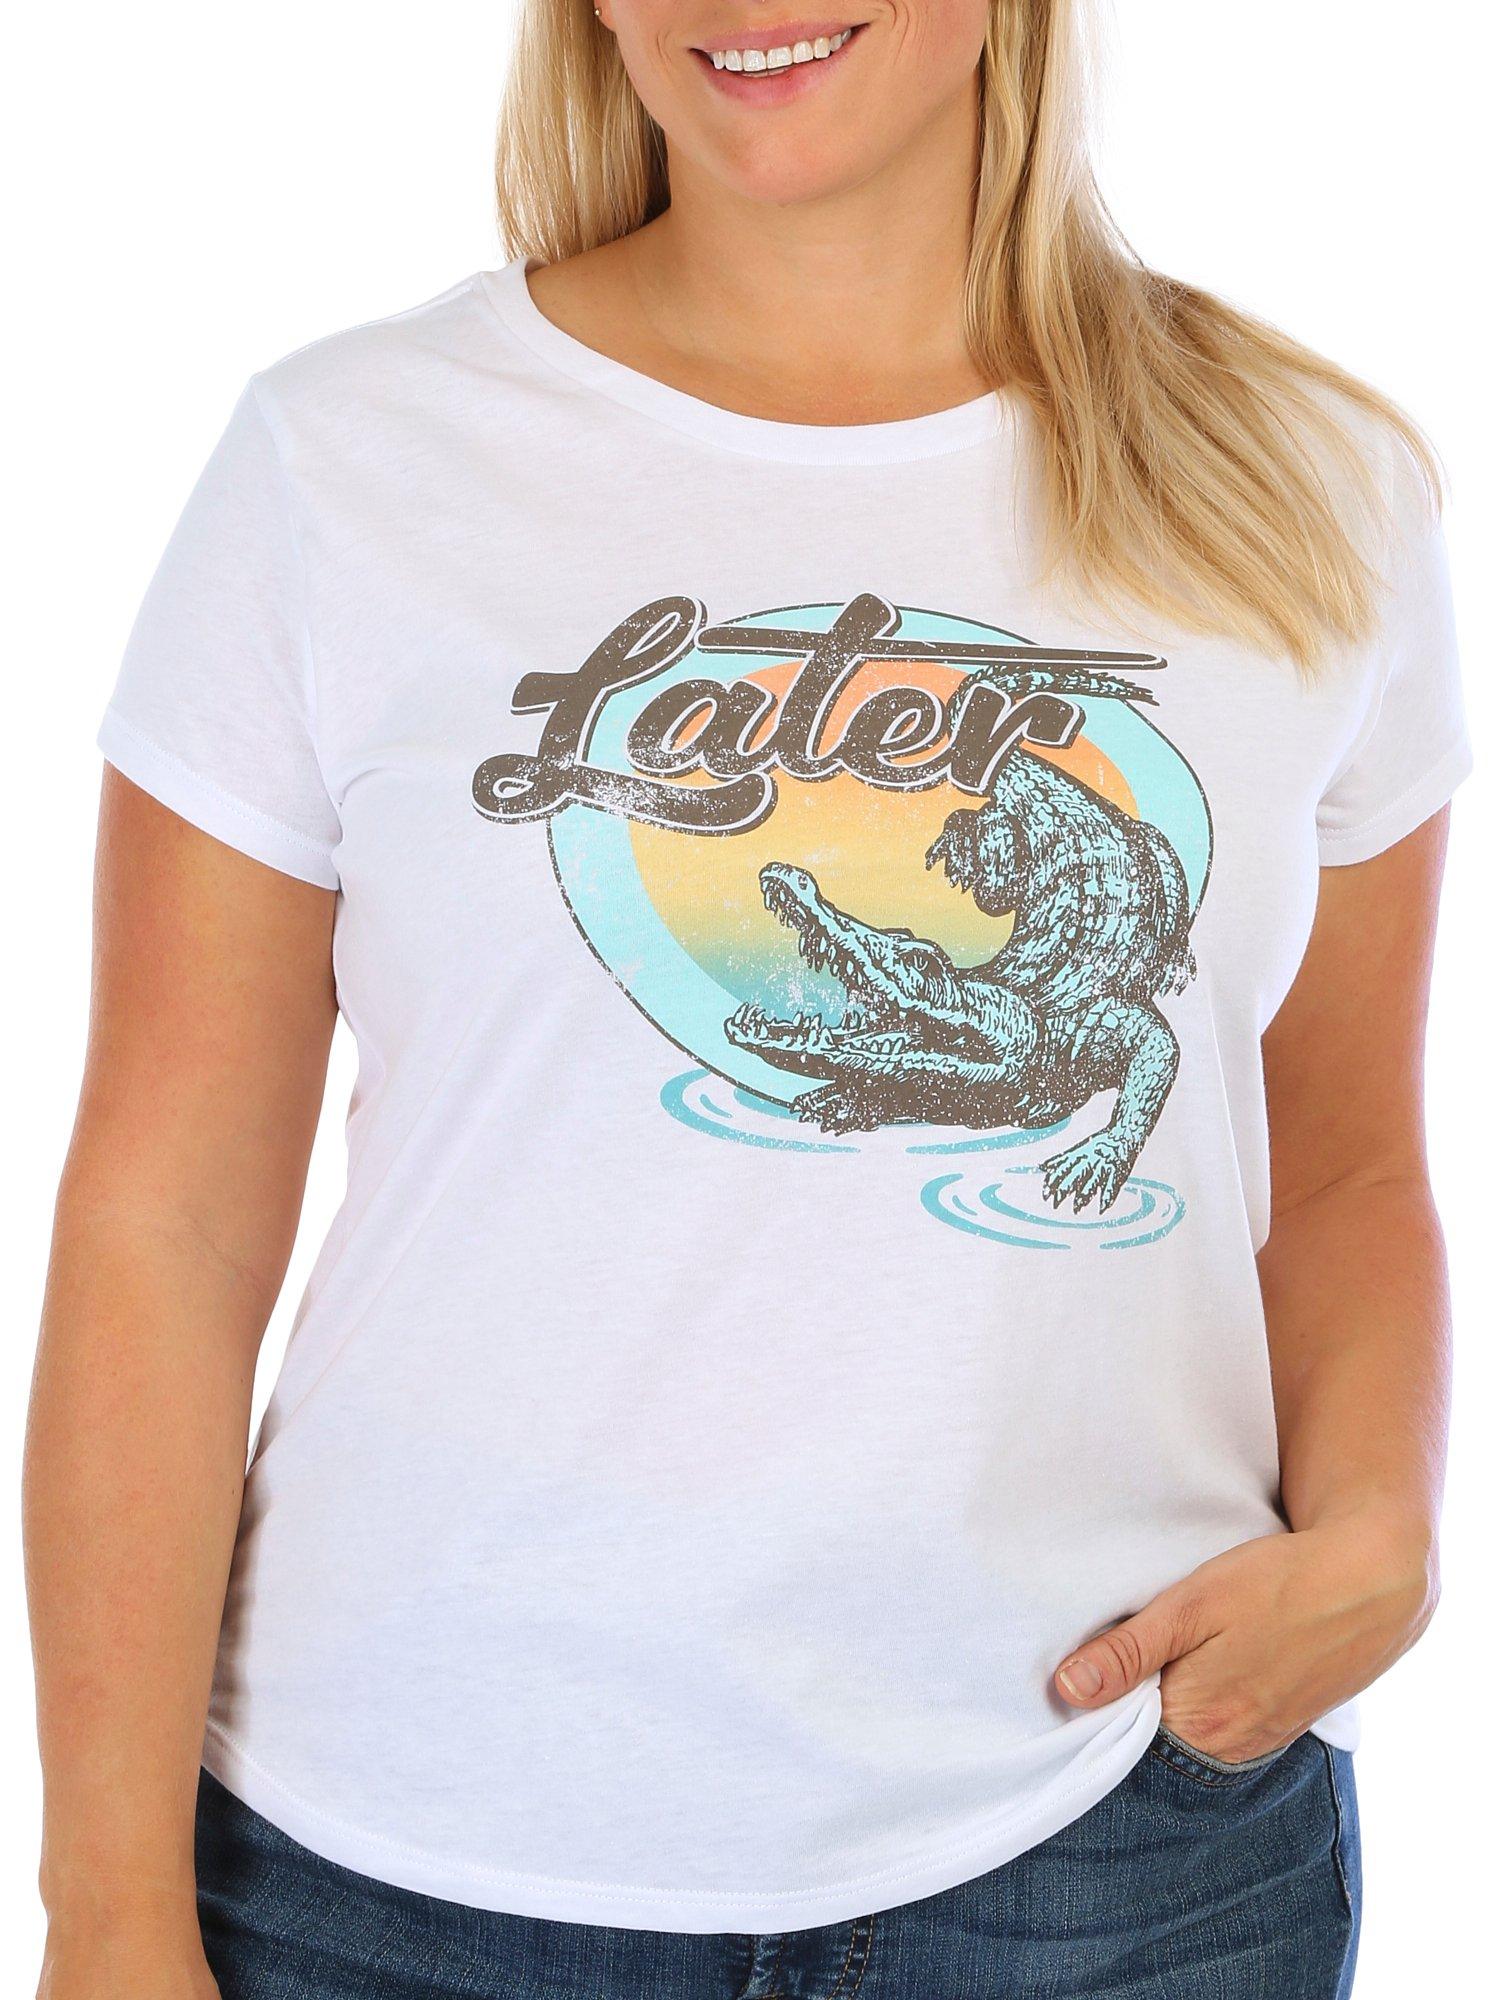 Plus Later Alligator Short Sleeve T-Shirt